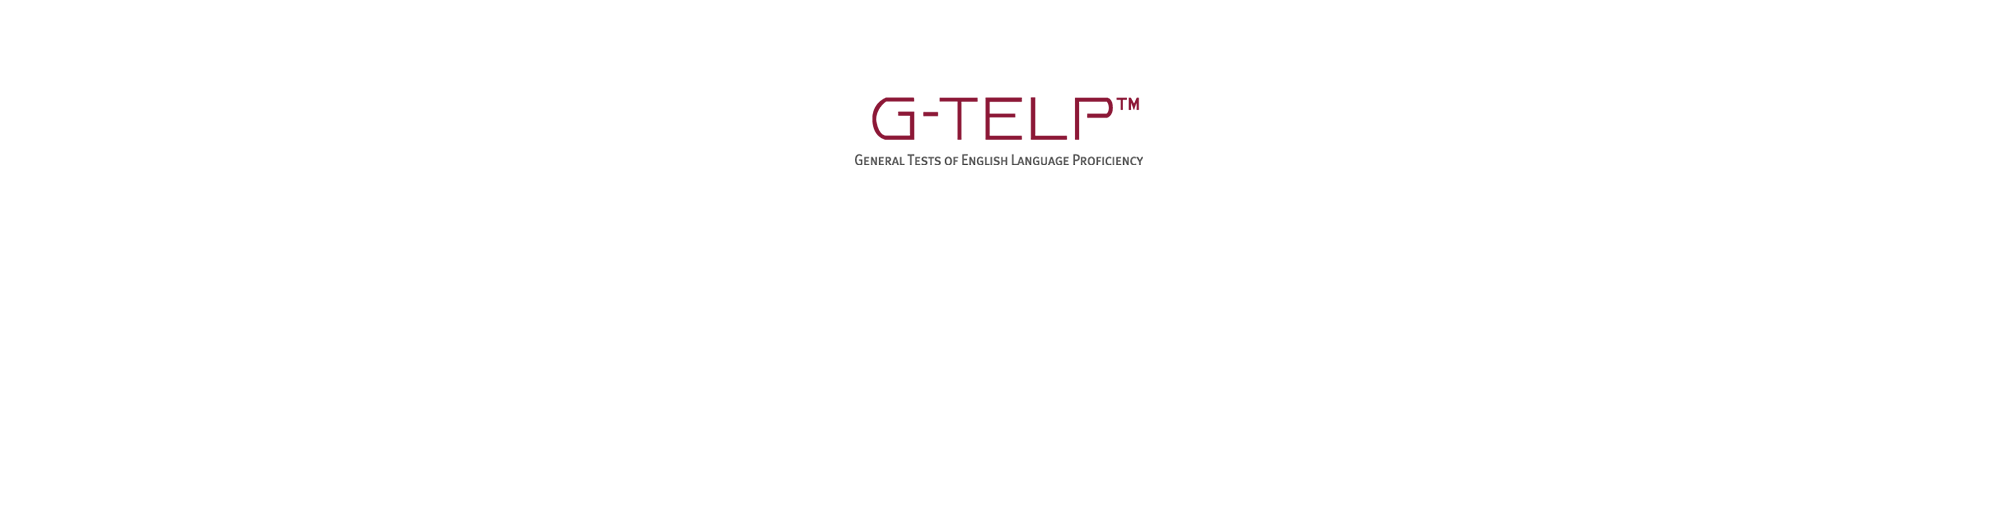 G-TELP 英語テストの世界標準